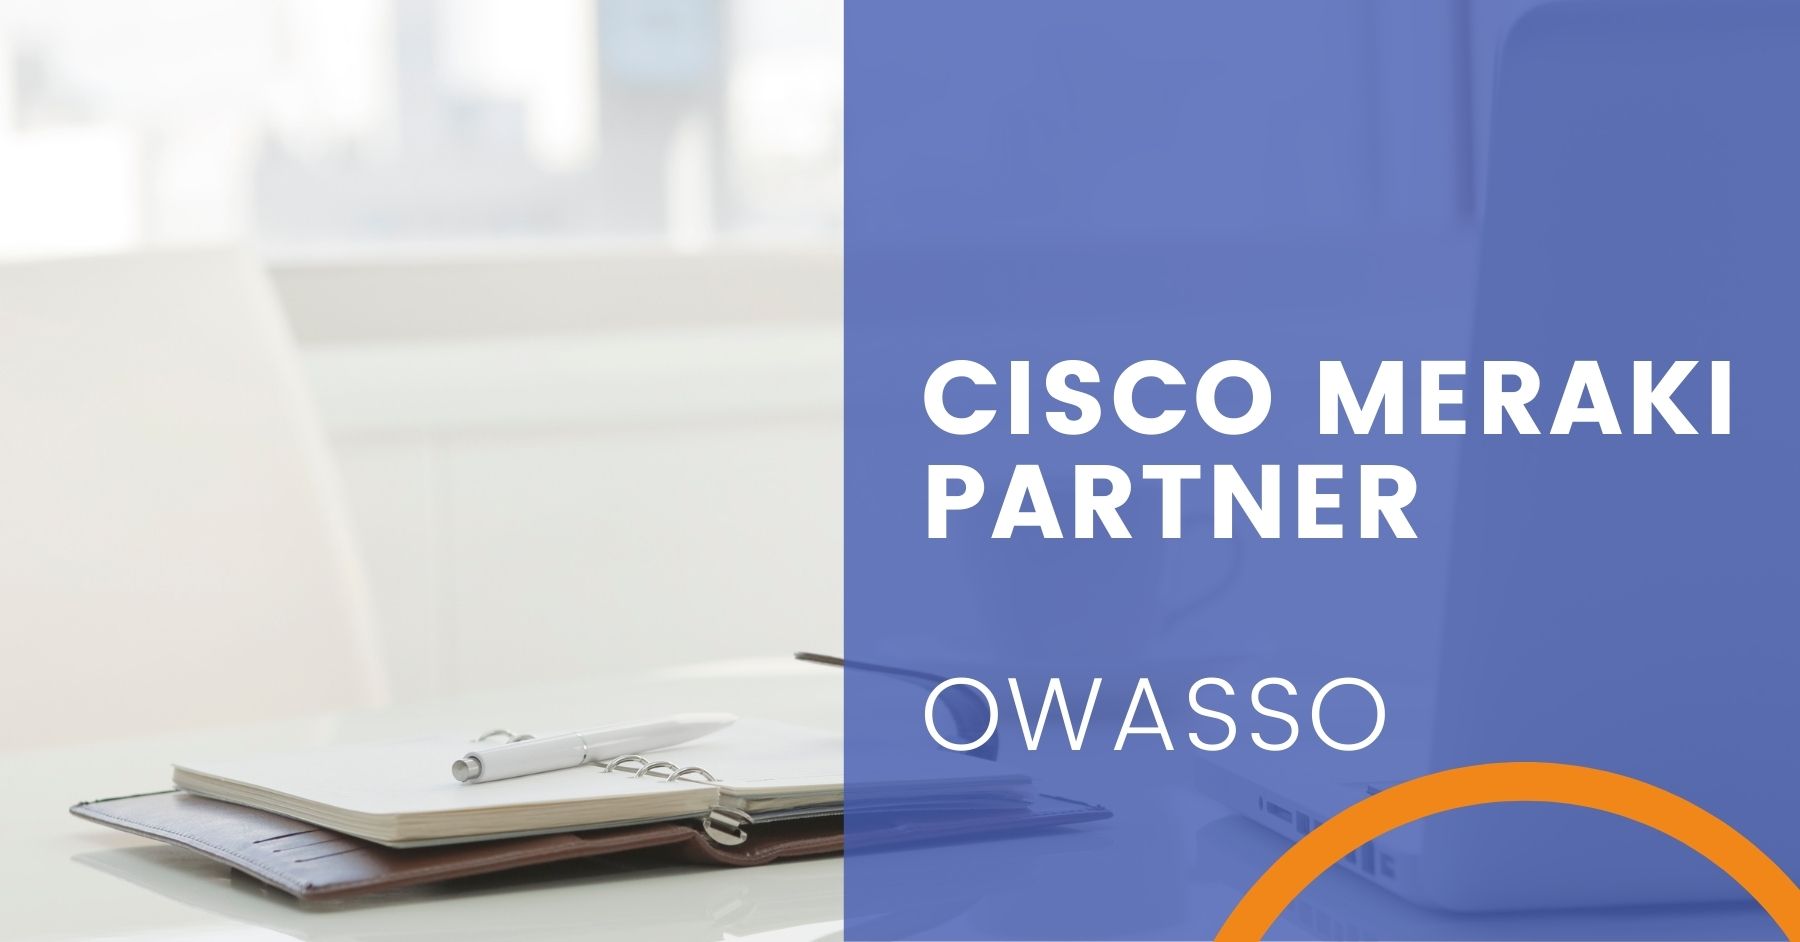 Cisco Meraki Partner in Owasso, Oklahoma